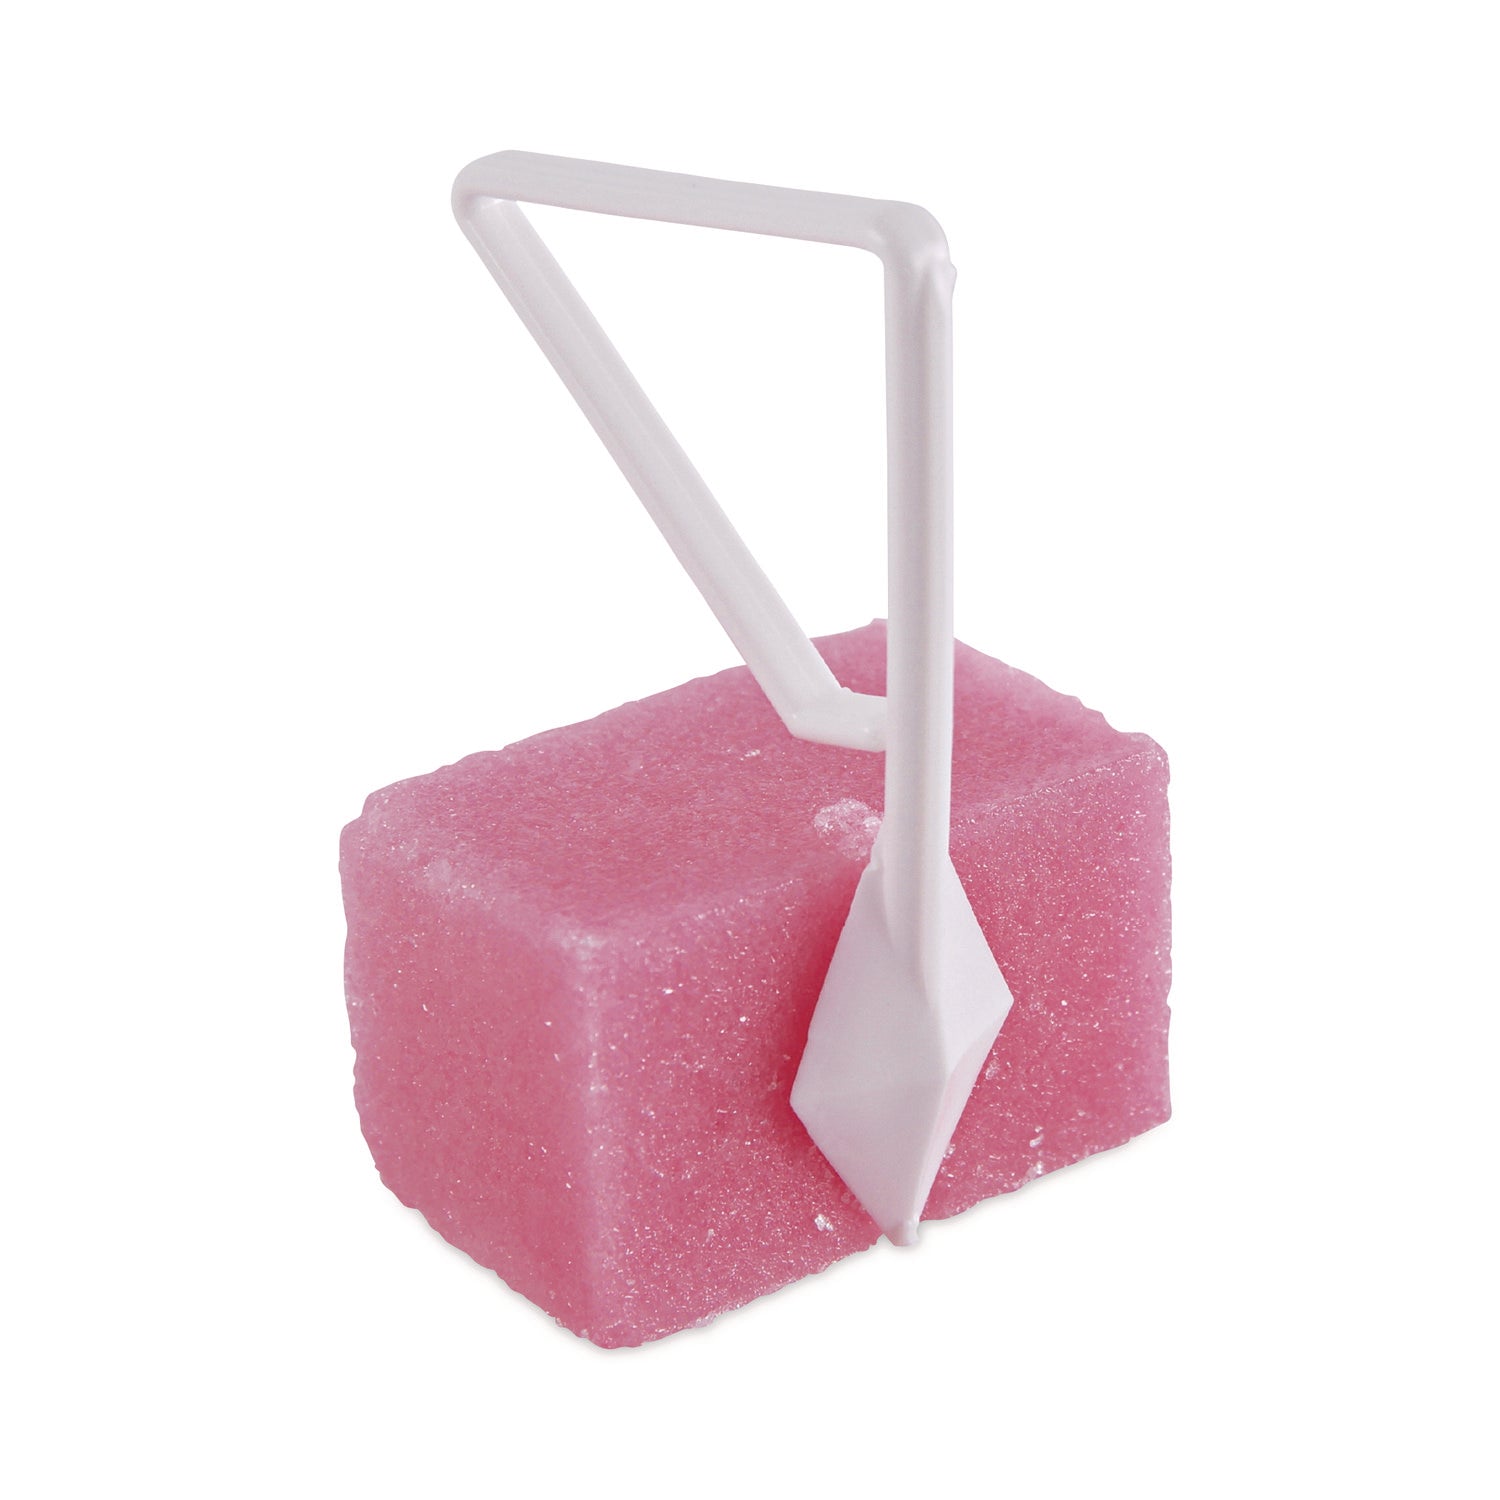 Toilet Bowl Para Deodorizer Block, Cherry Scent, 4 oz, Pink, 12/Box - 2